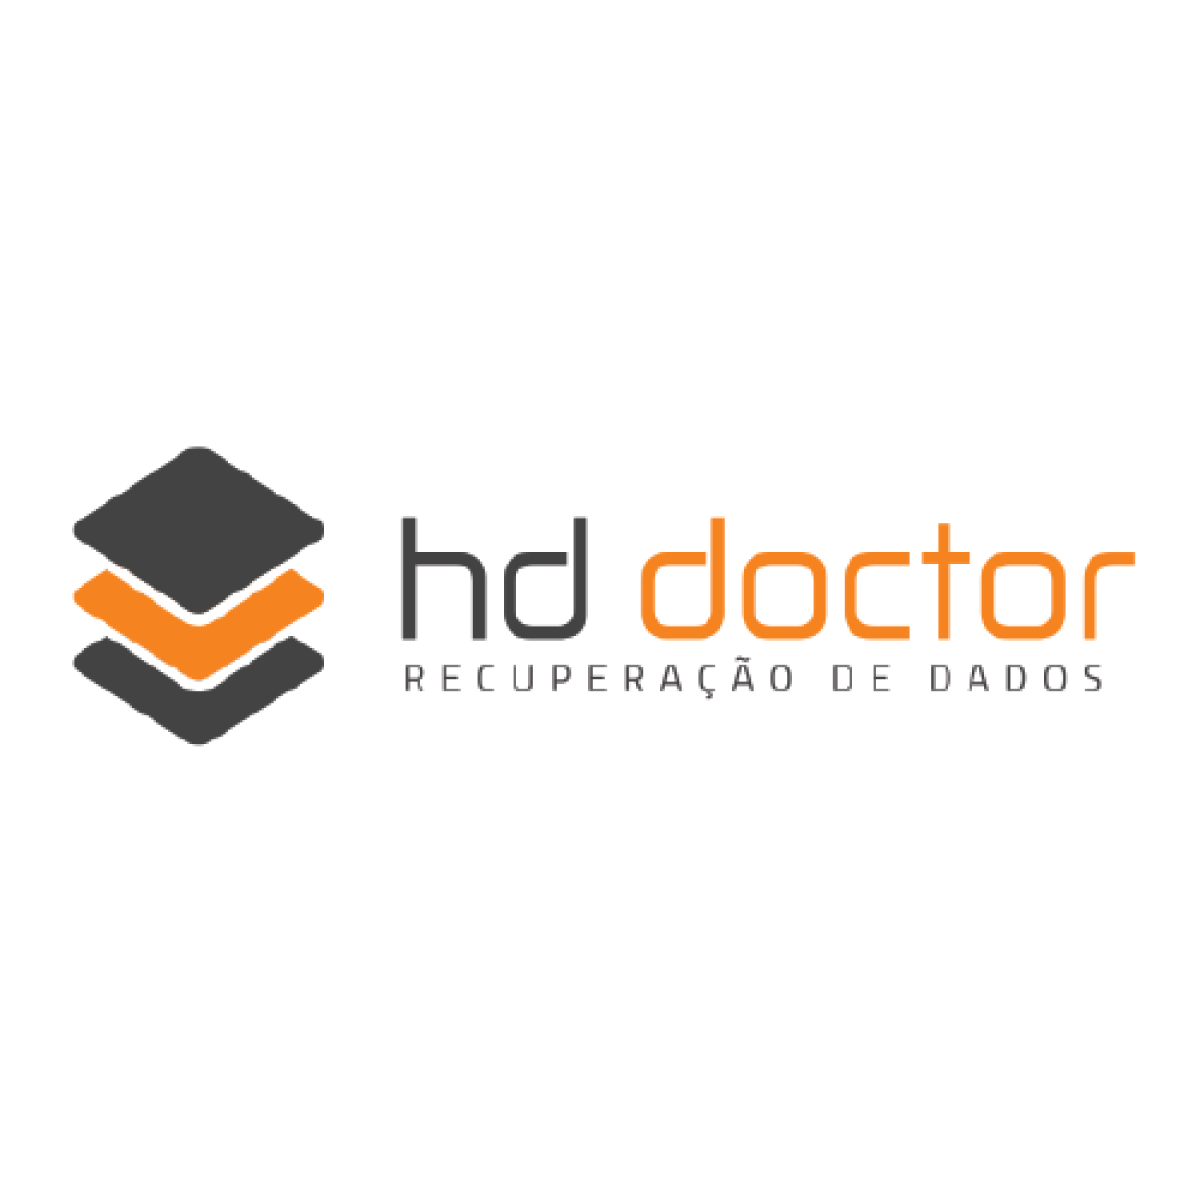 HD Doctor